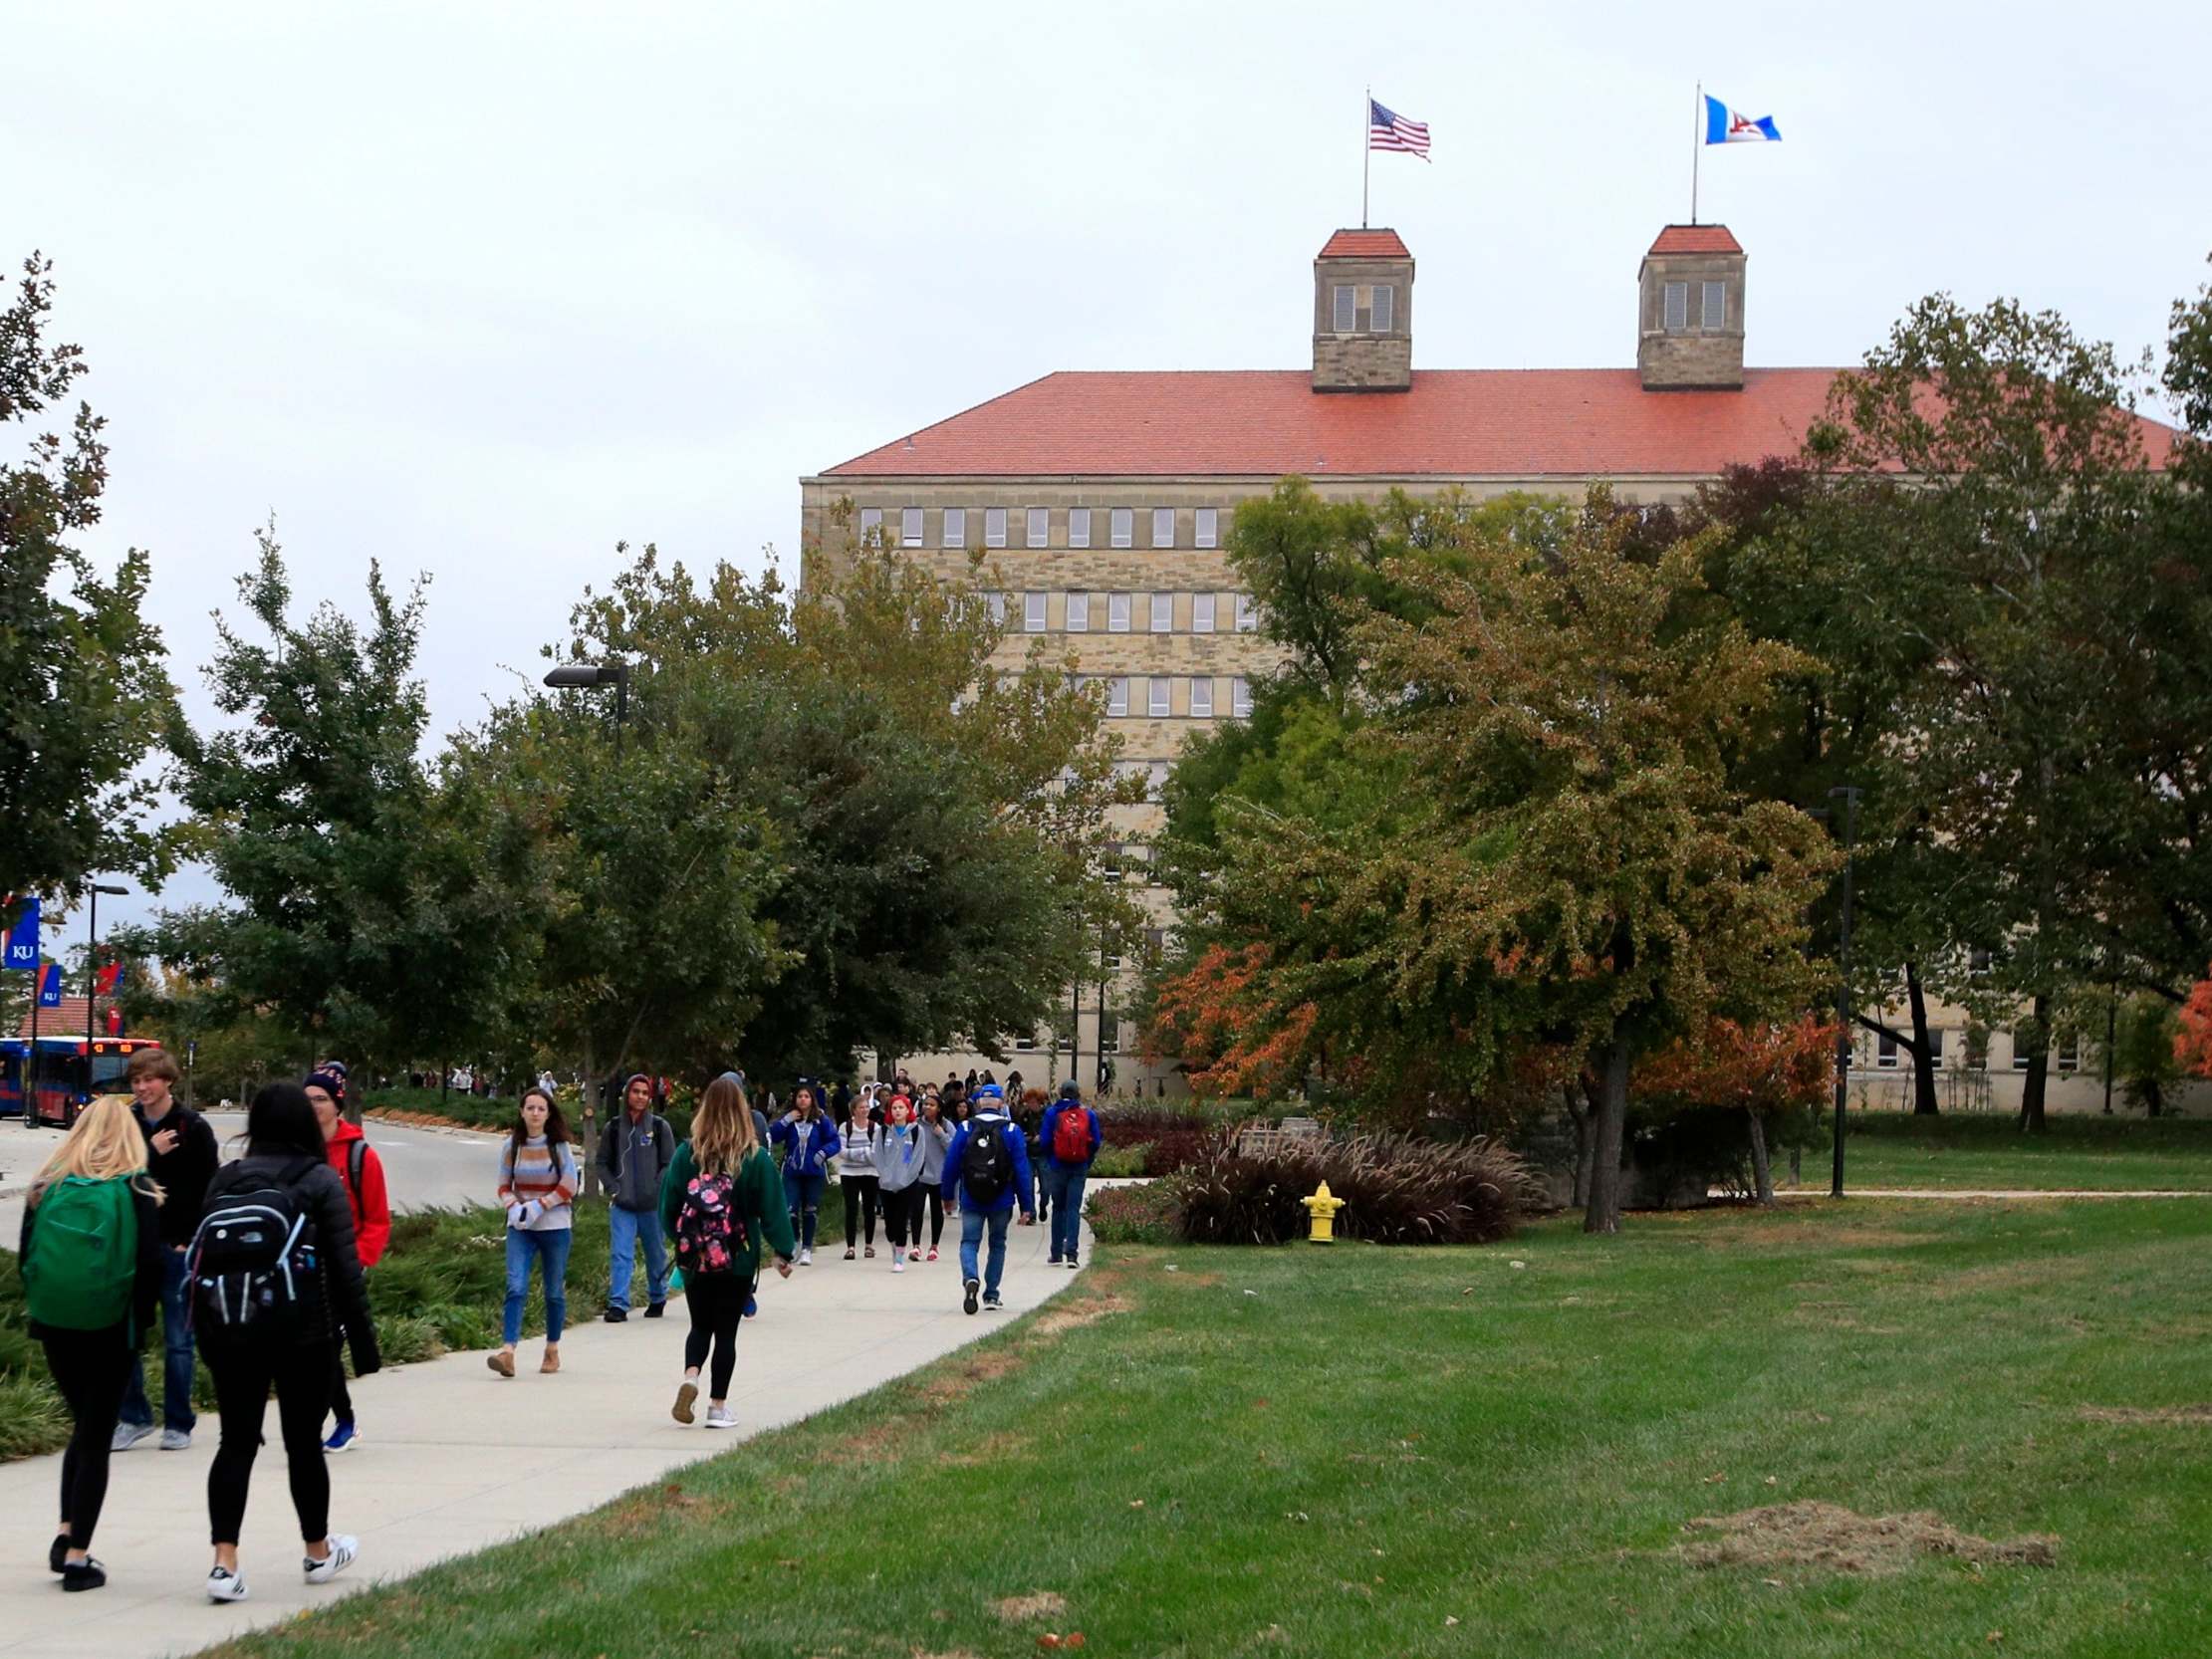 Students walk on the University of Kansas campus